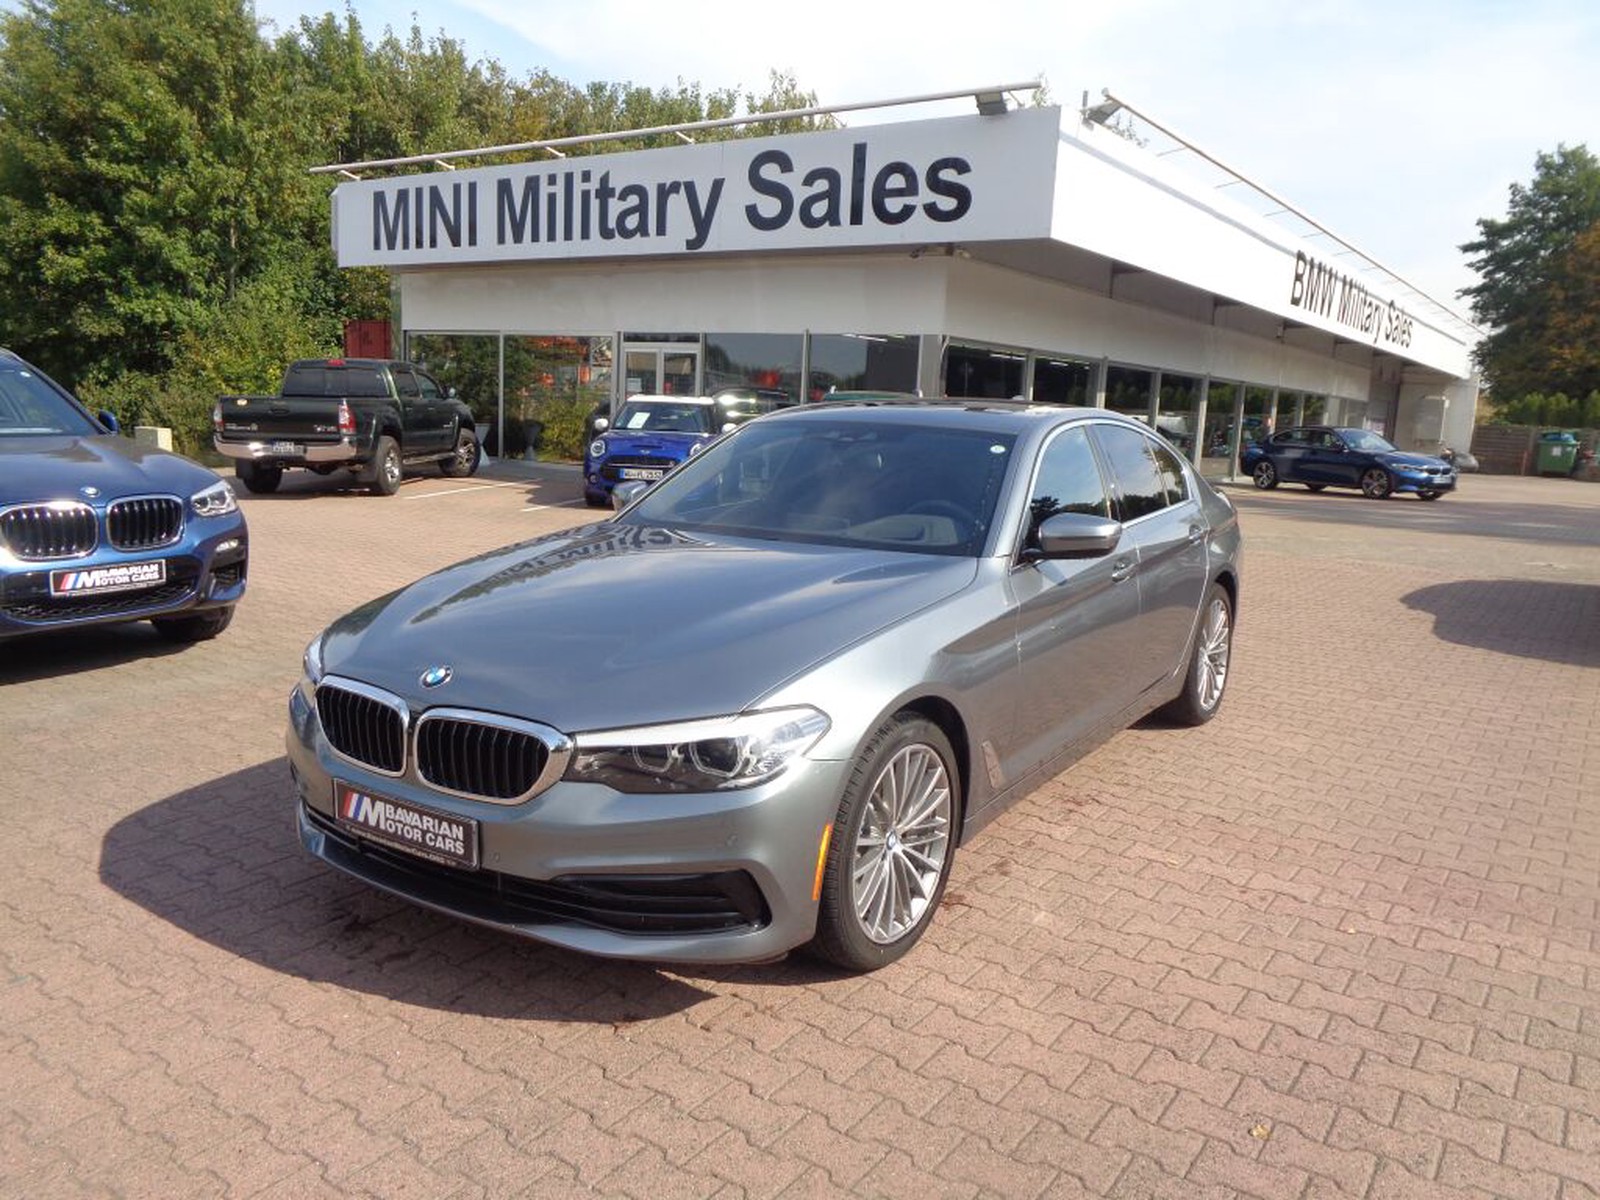 BMW 530 i xDrive Sedan - Tax Free Military Sales in Kaiserslautern